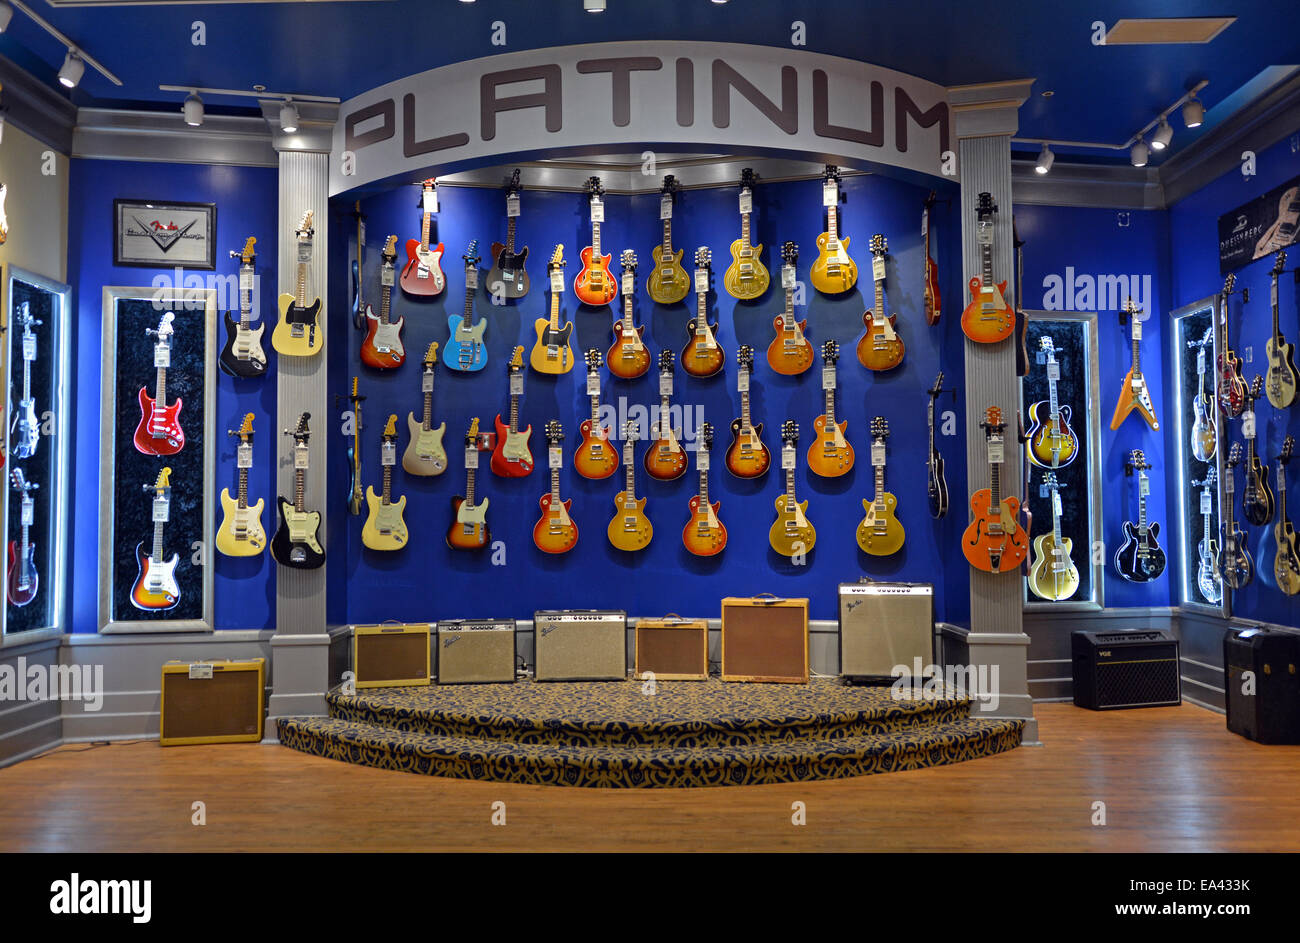 Teure gitarren -Fotos und -Bildmaterial in hoher Auflösung – Alamy